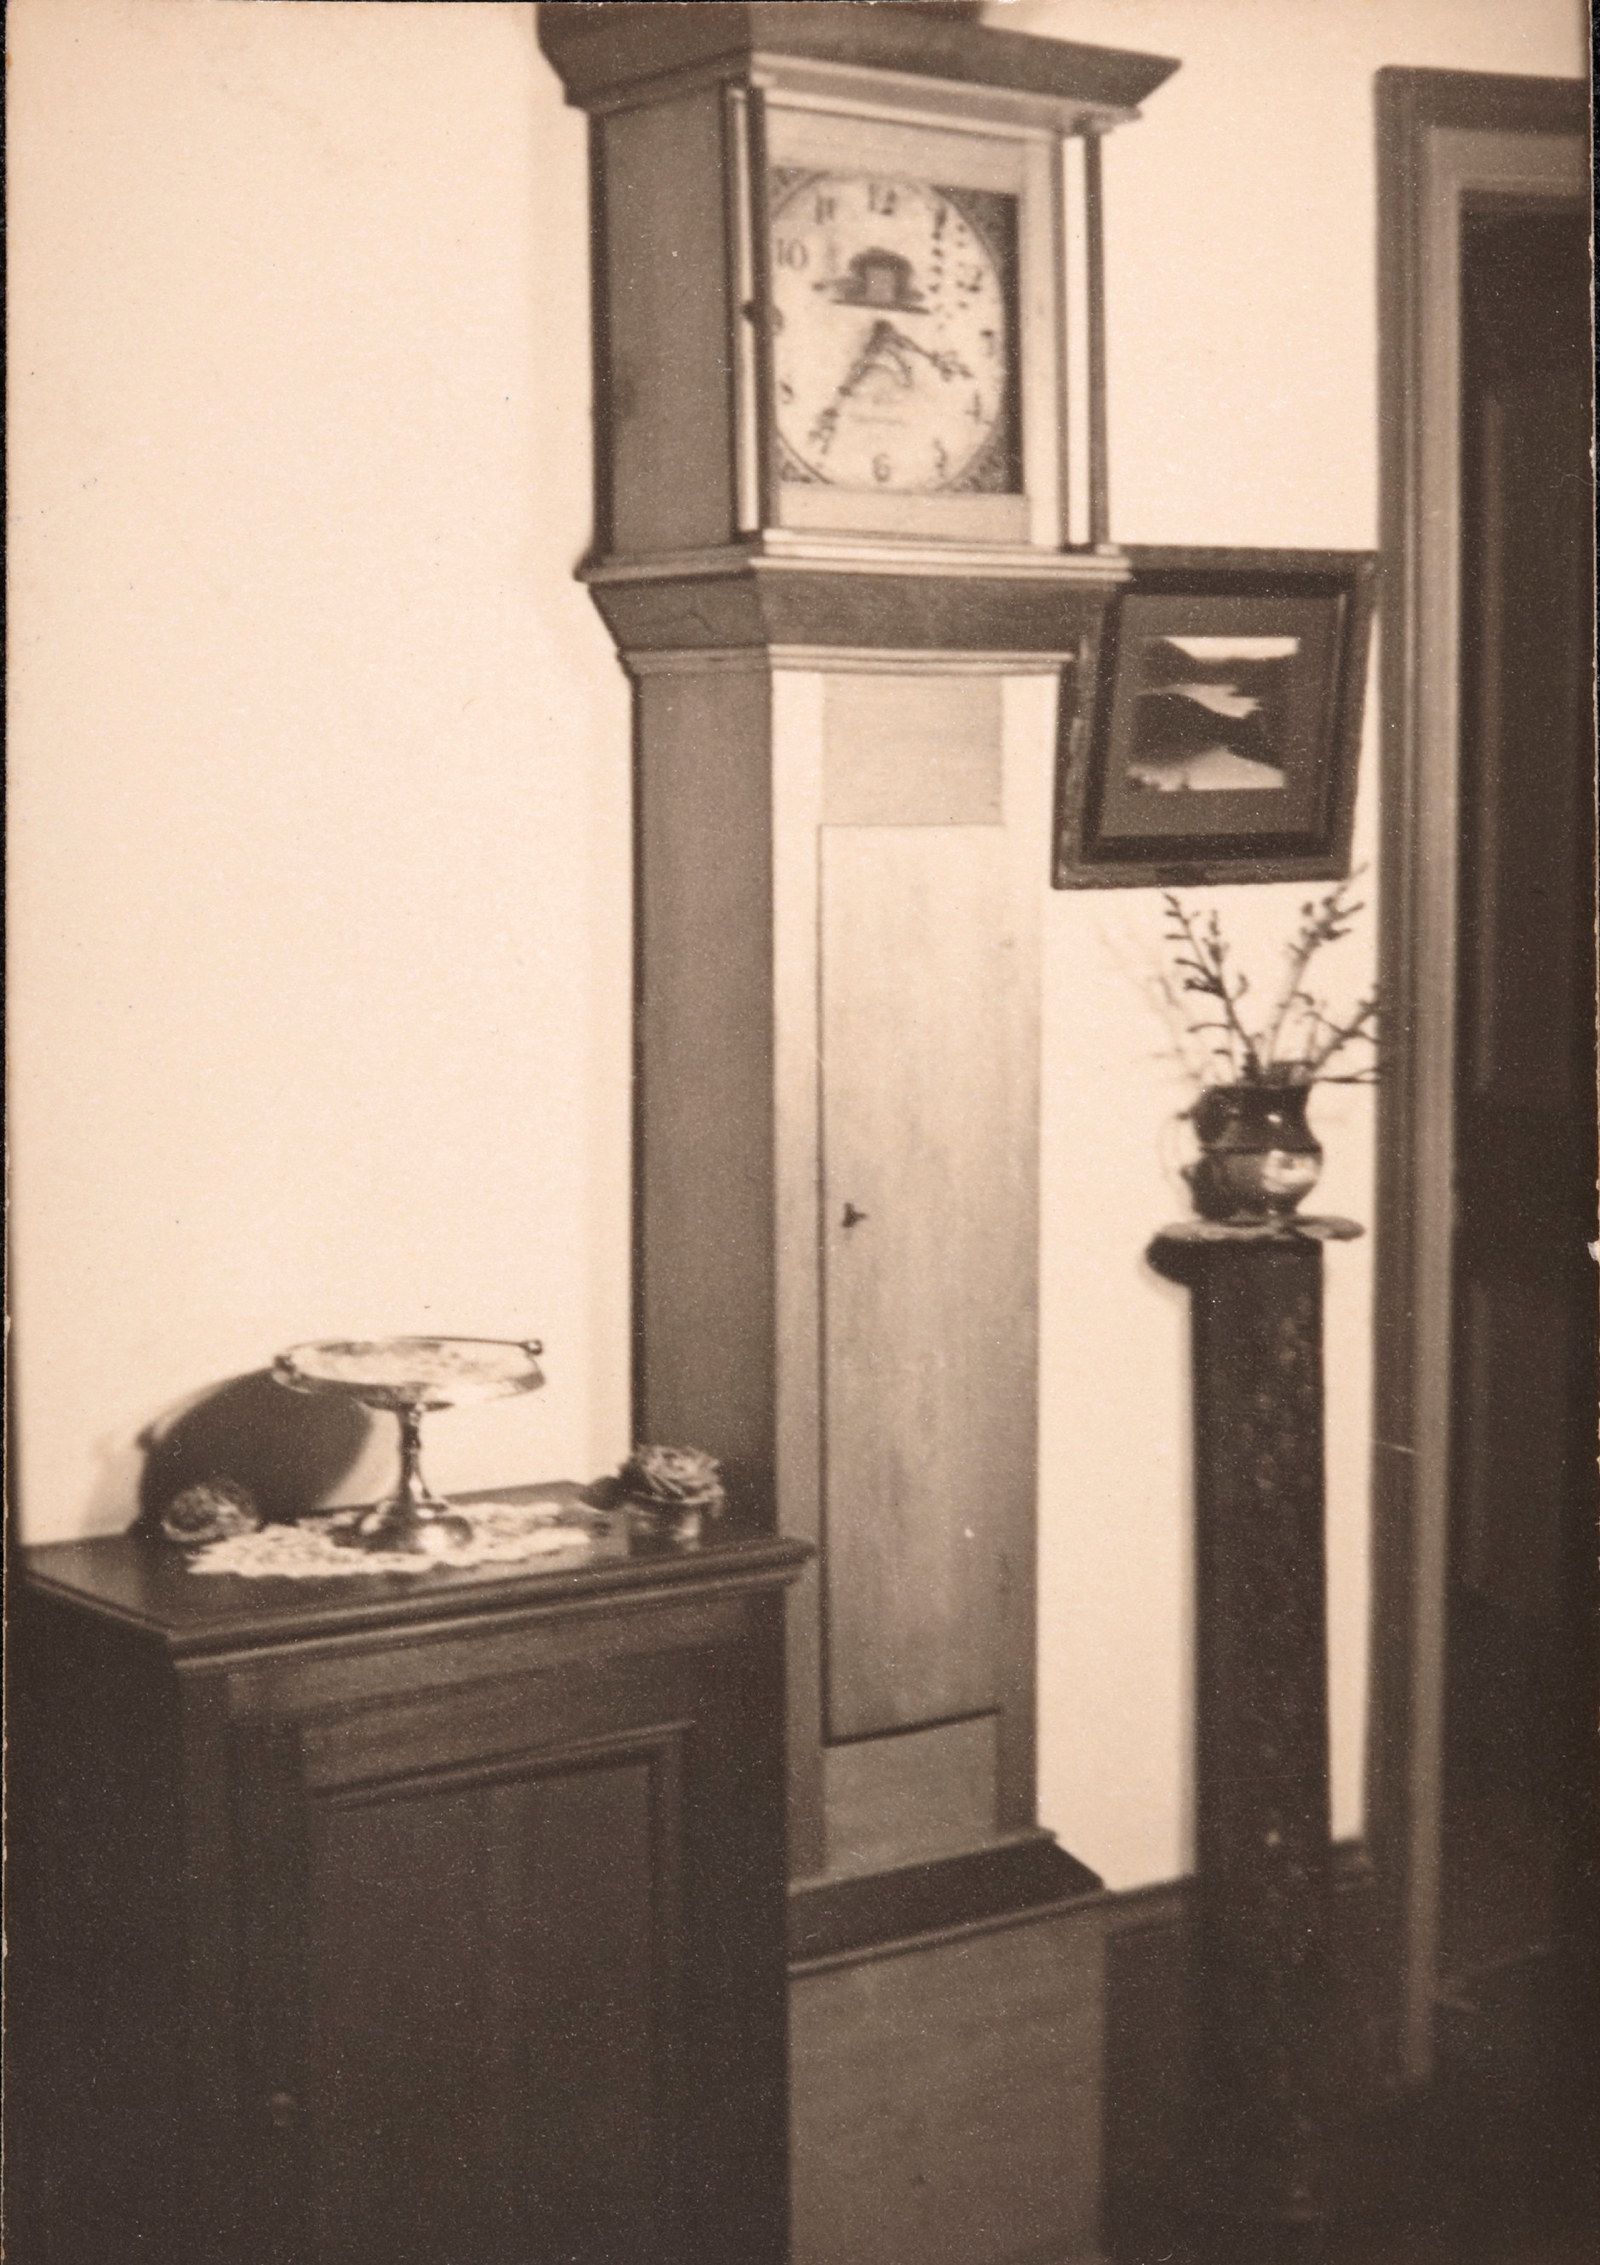 Longcase clock in the hallway at Meroogal, around 1945 / Mary Duckworth